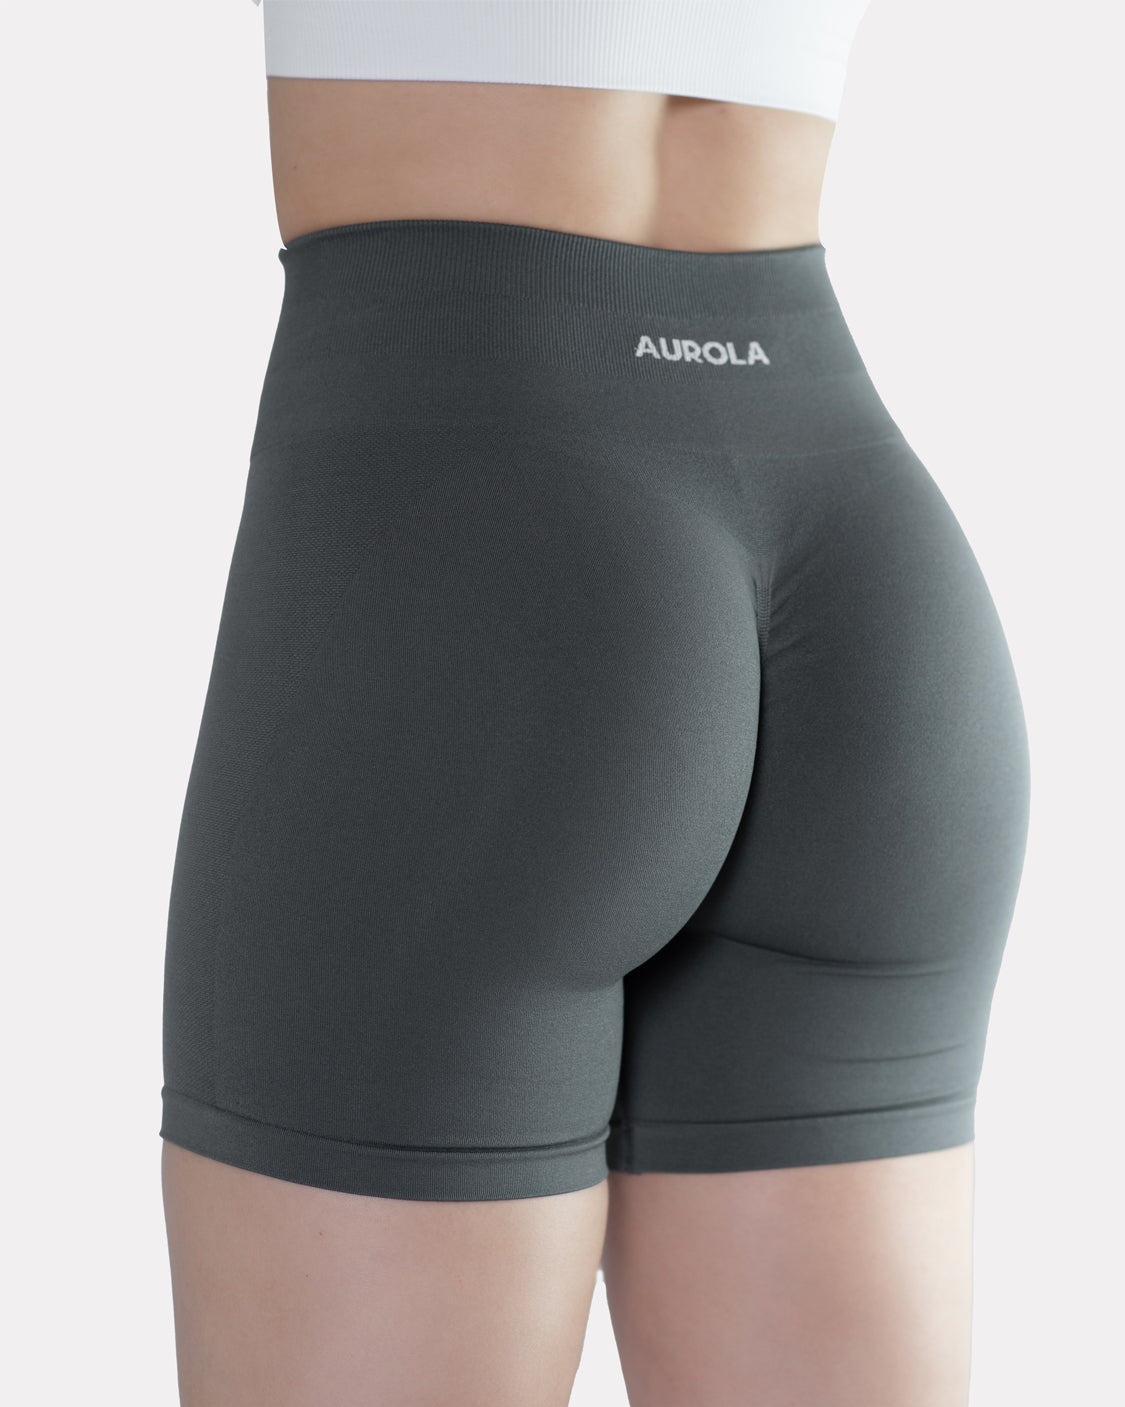 Aurola Workout Shorts Blue - $25 (50% Off Retail) - From Saleen